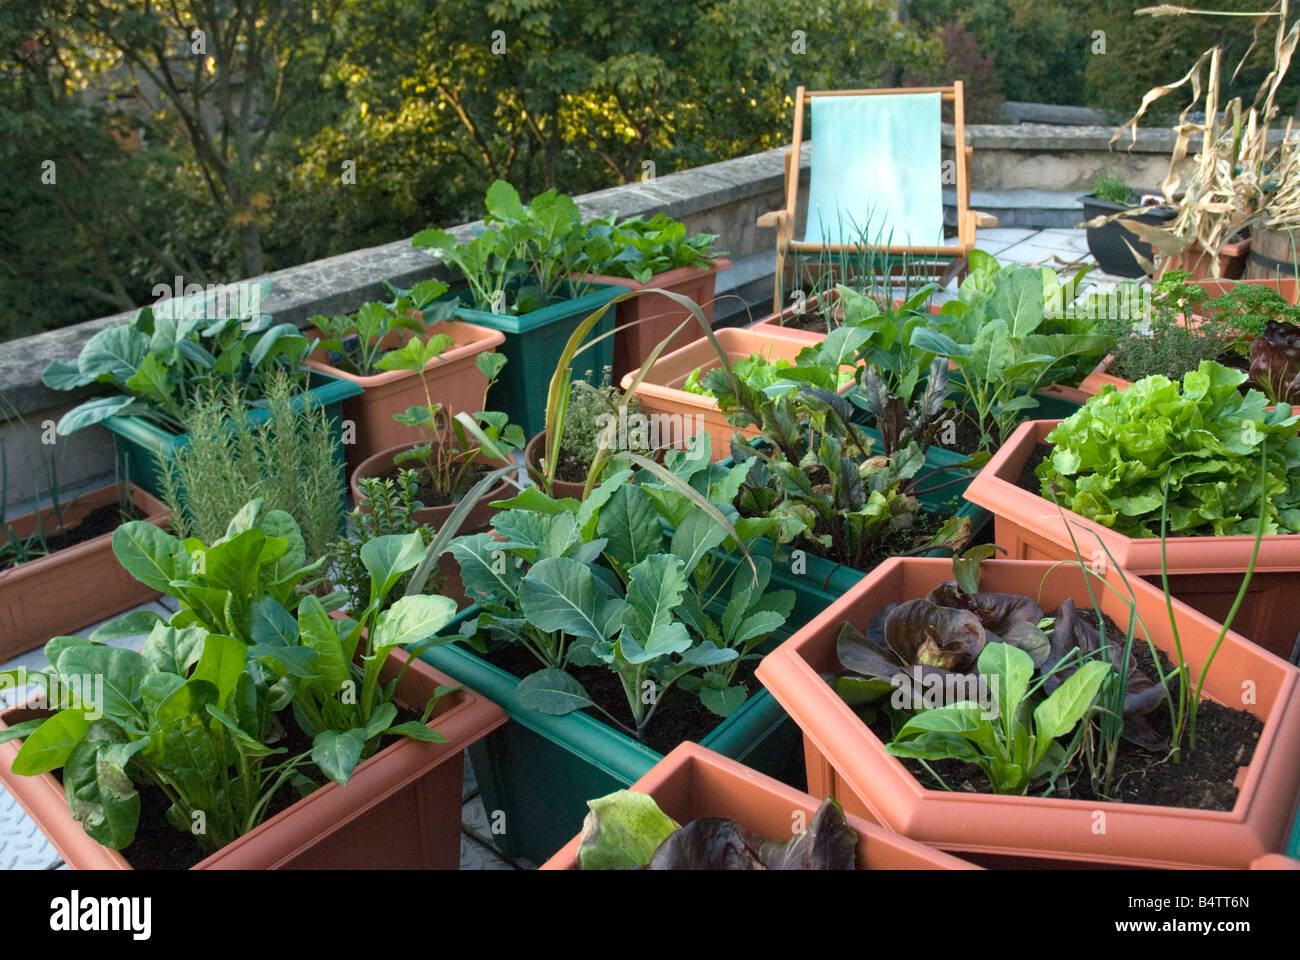 Vegetables growing on urban rooftop London urban veggie garden Stock Photo